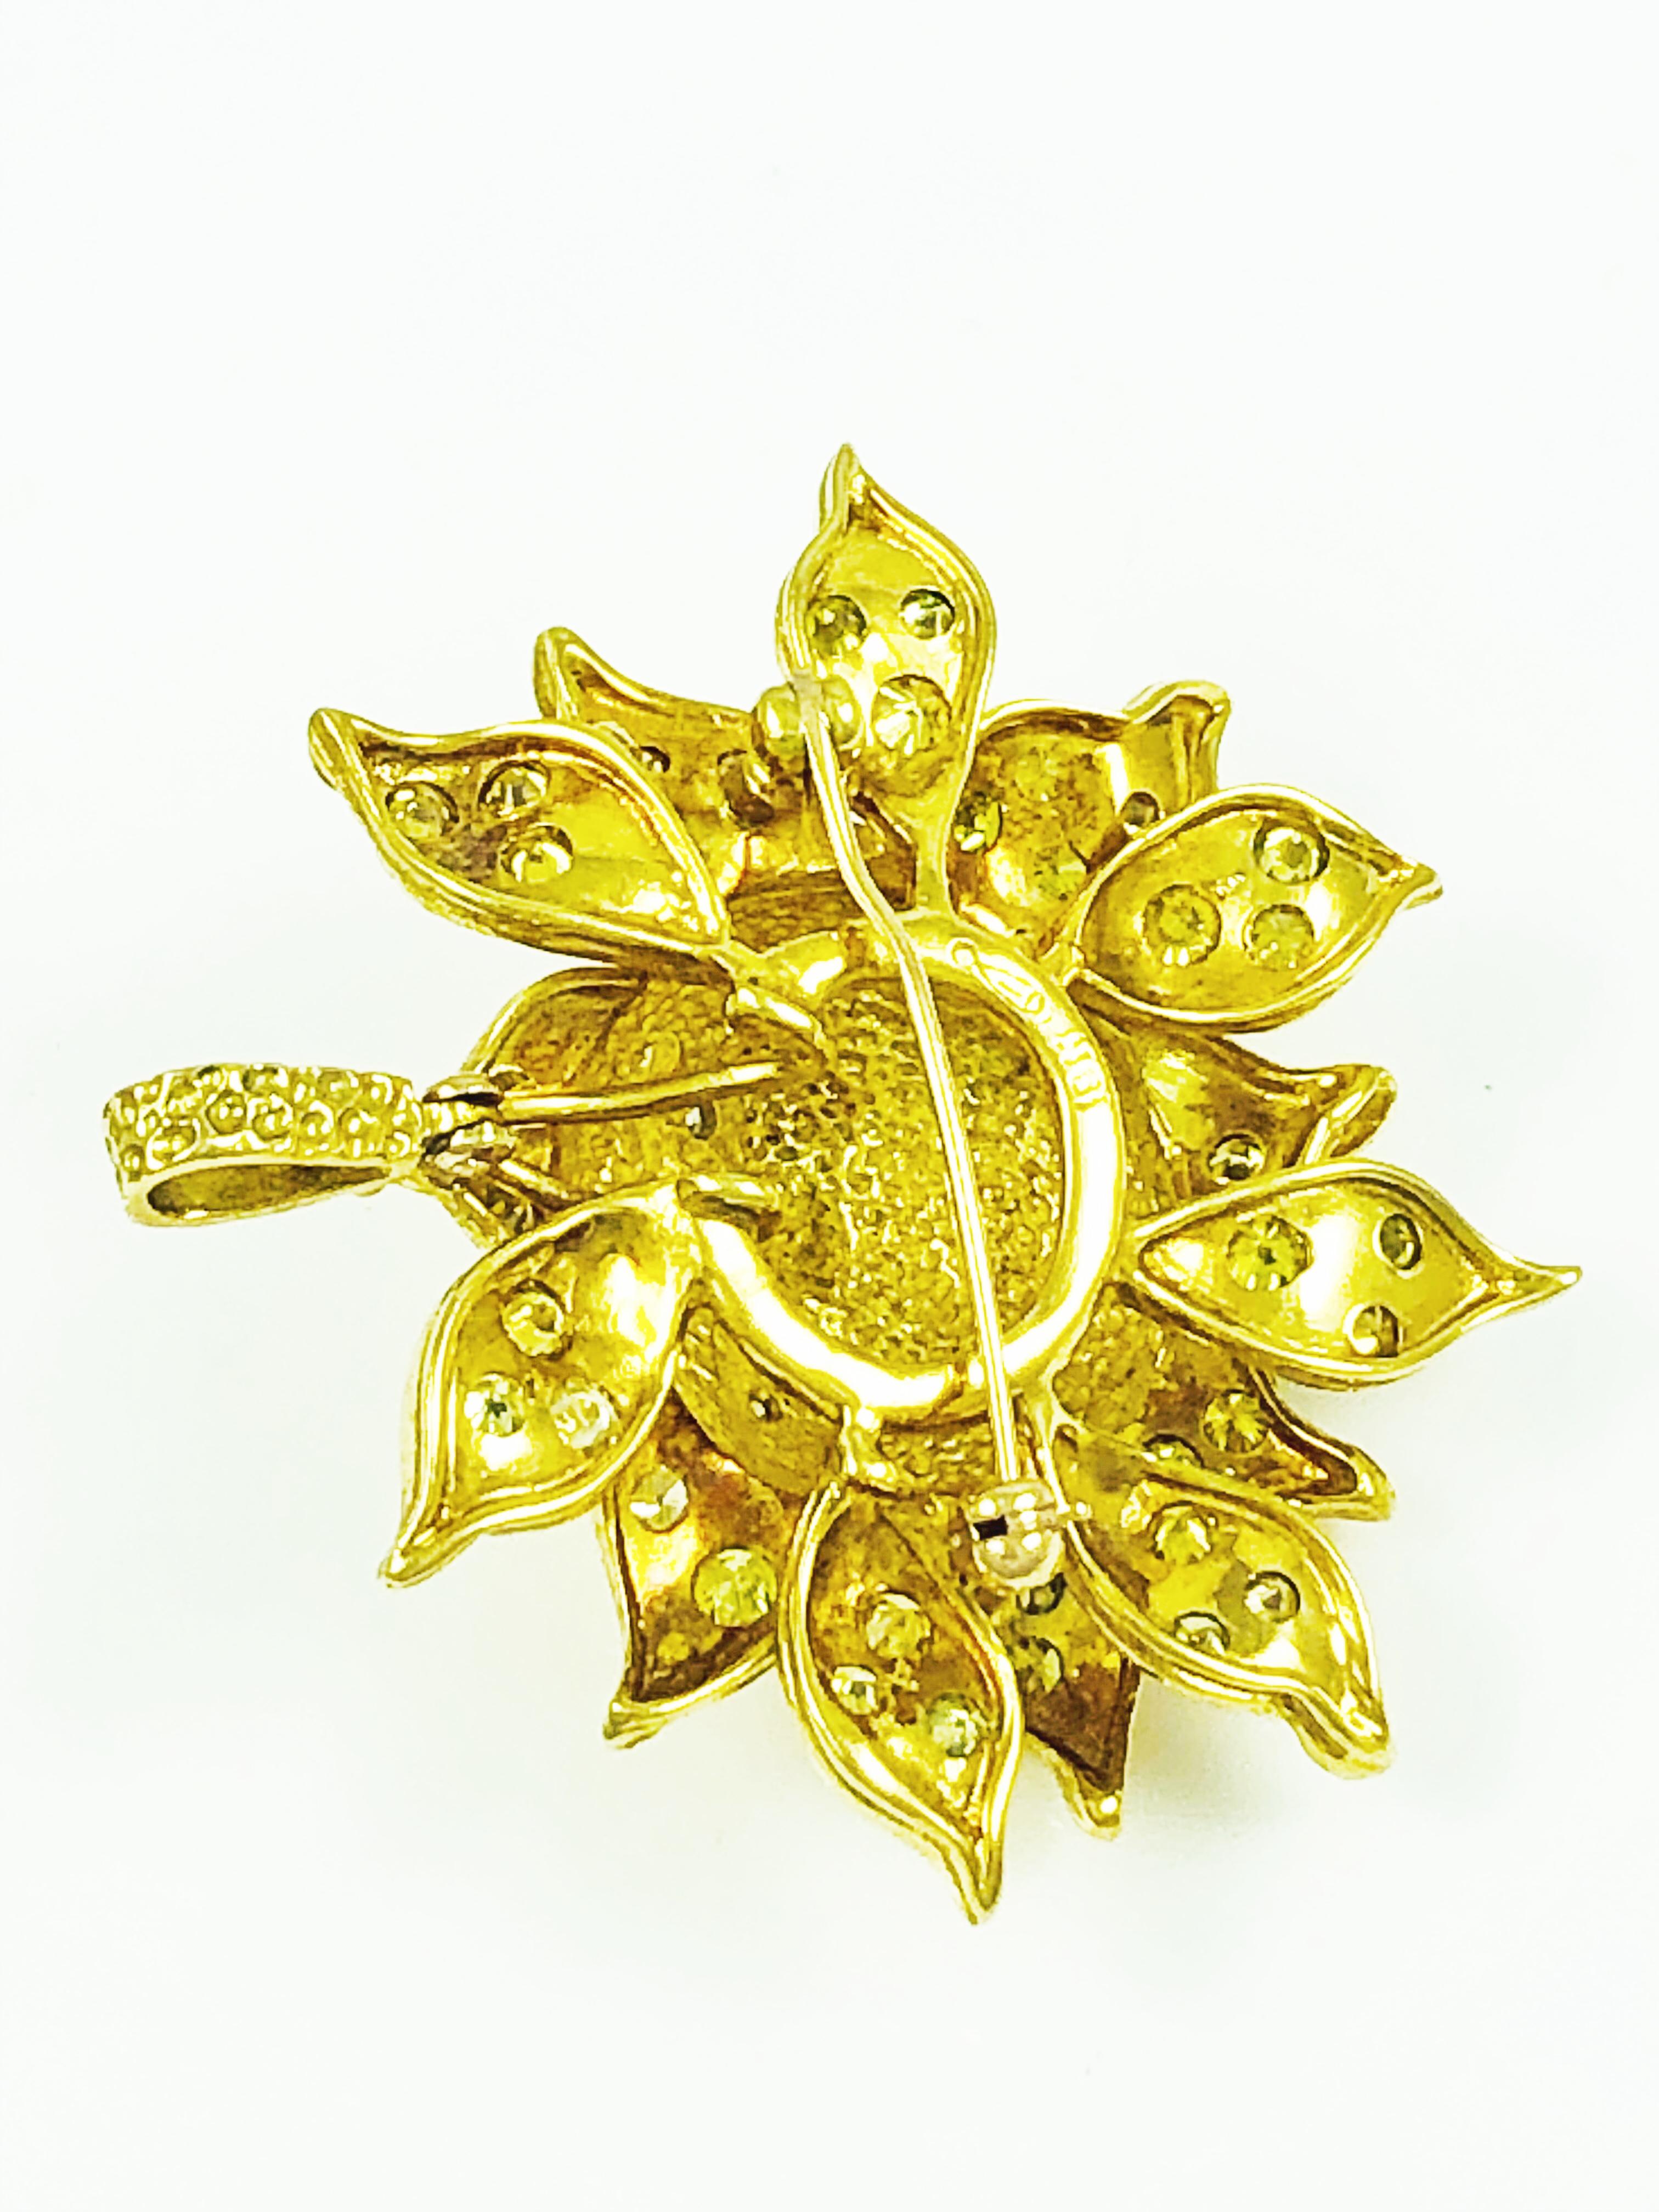 Peter Linderman 18 Karat Gold and Multicolored Diamond Sun Brooch and Pendant 1